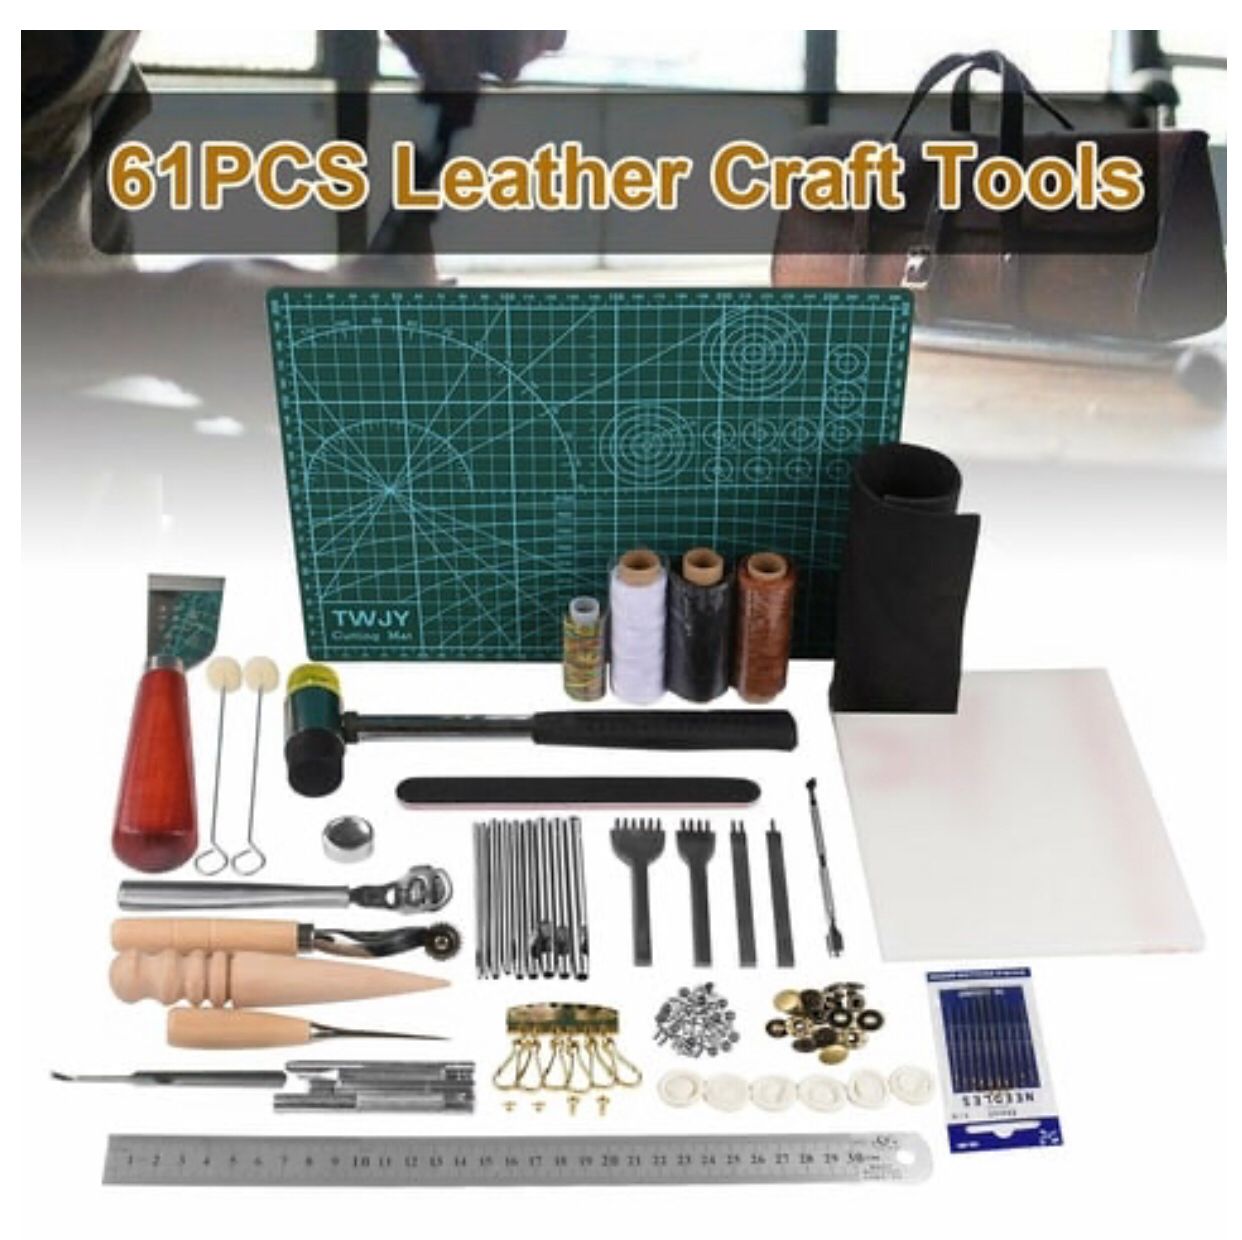 61 pcs Leather Craft Tools Punch Kit Stitching Working Stitching